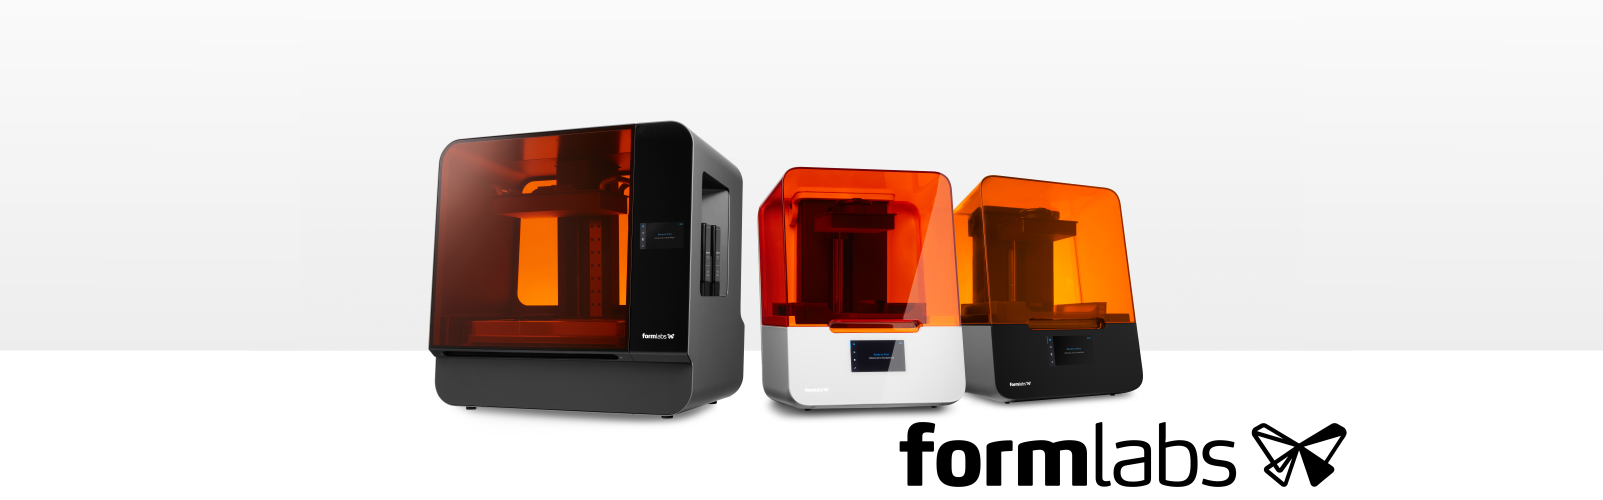 Formlabs High-resolution SLA 3D Printers